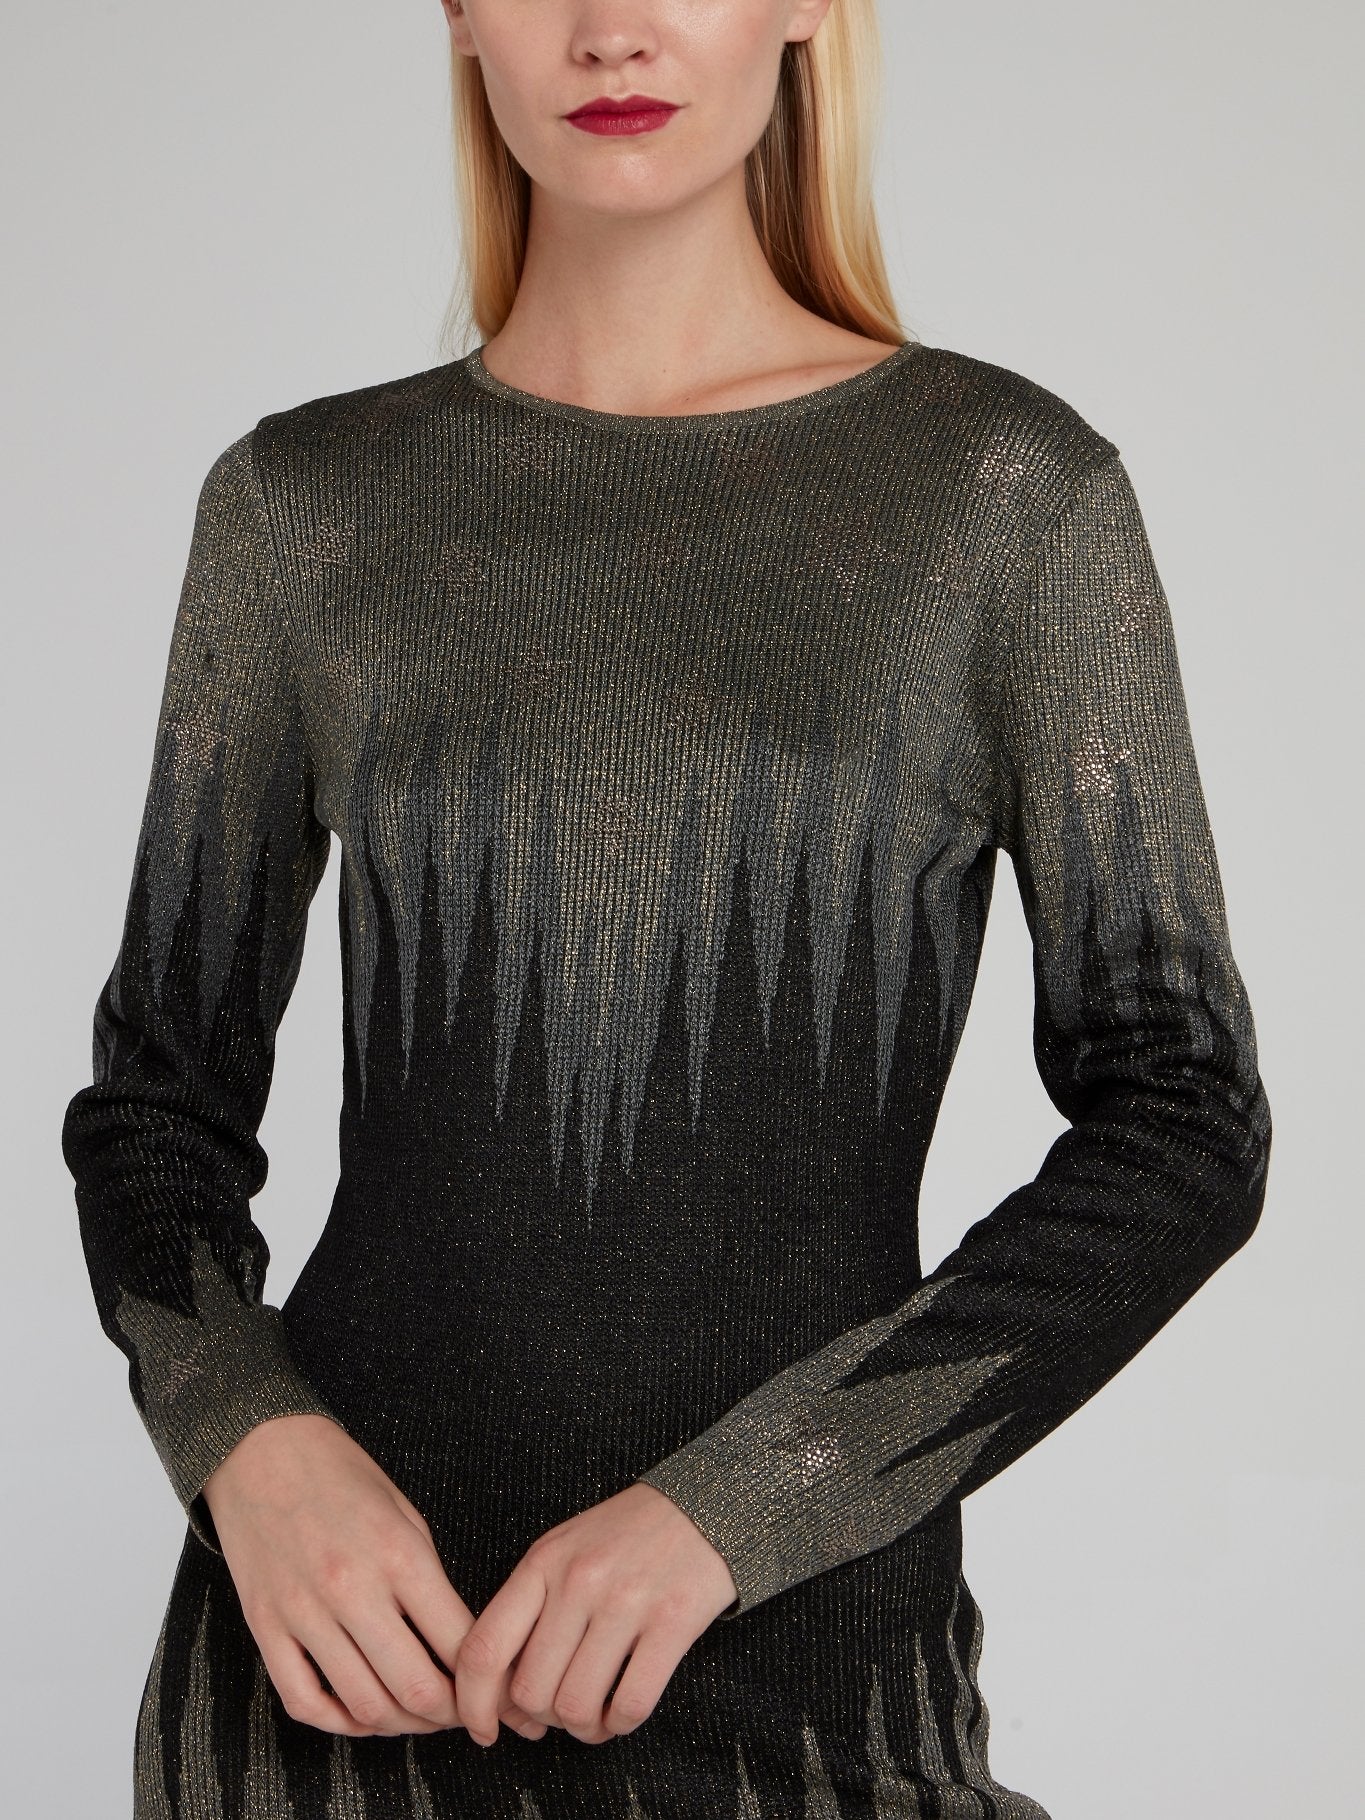 Metallic Embellished Sweater Dress